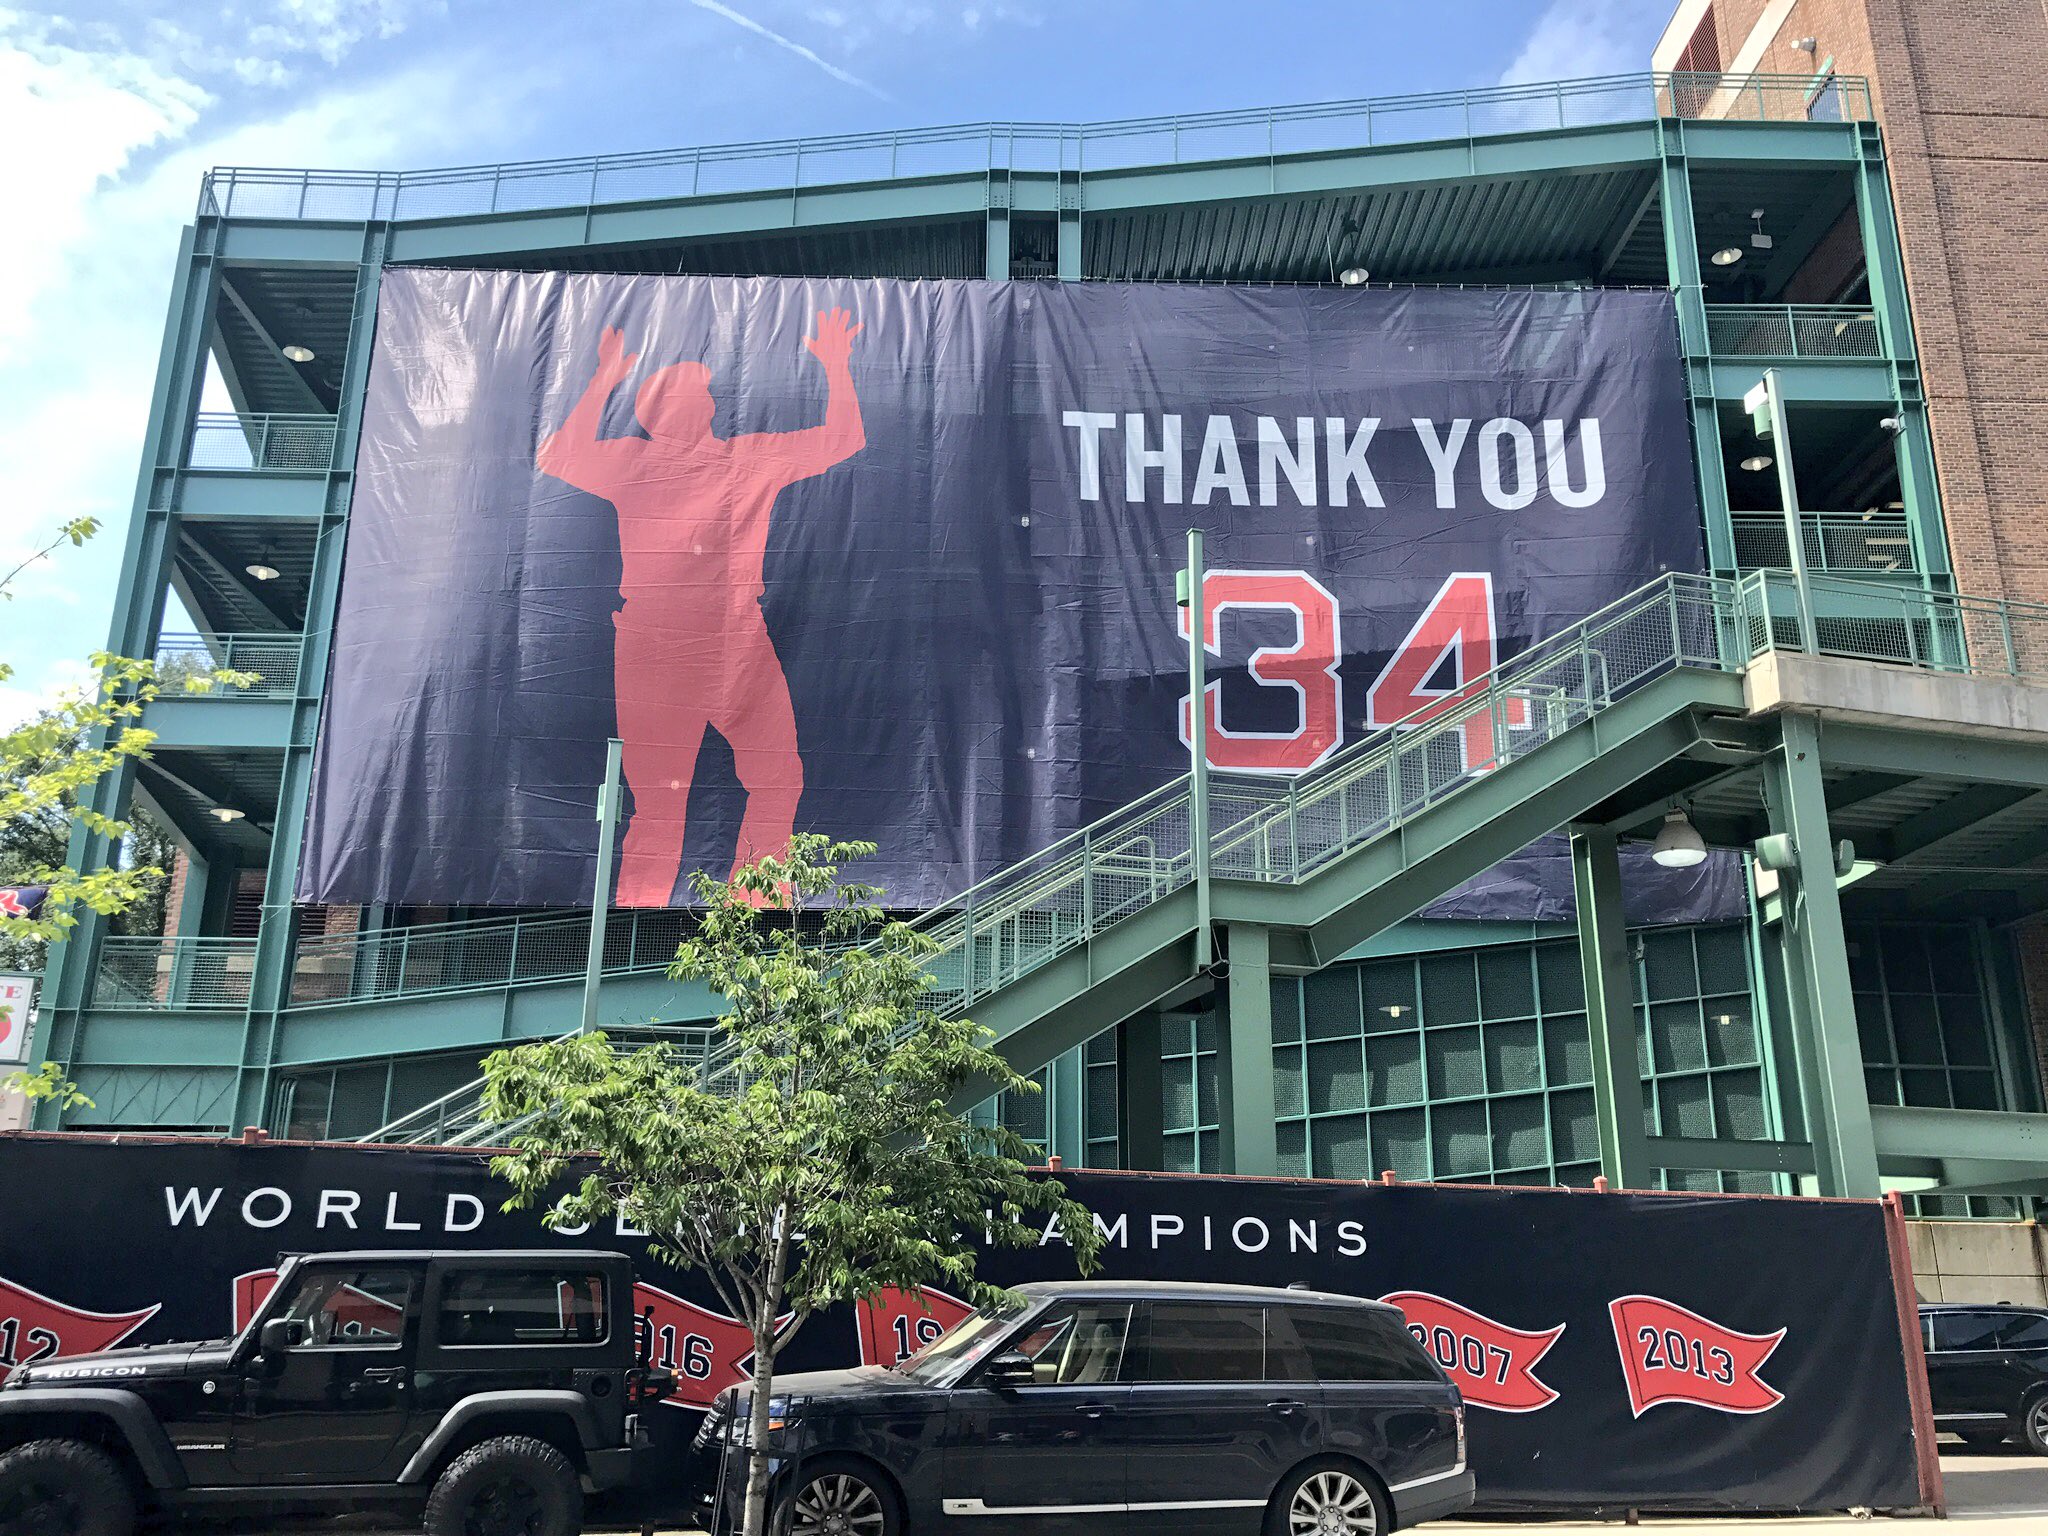 Boston officially retires Big Papi's No. 34